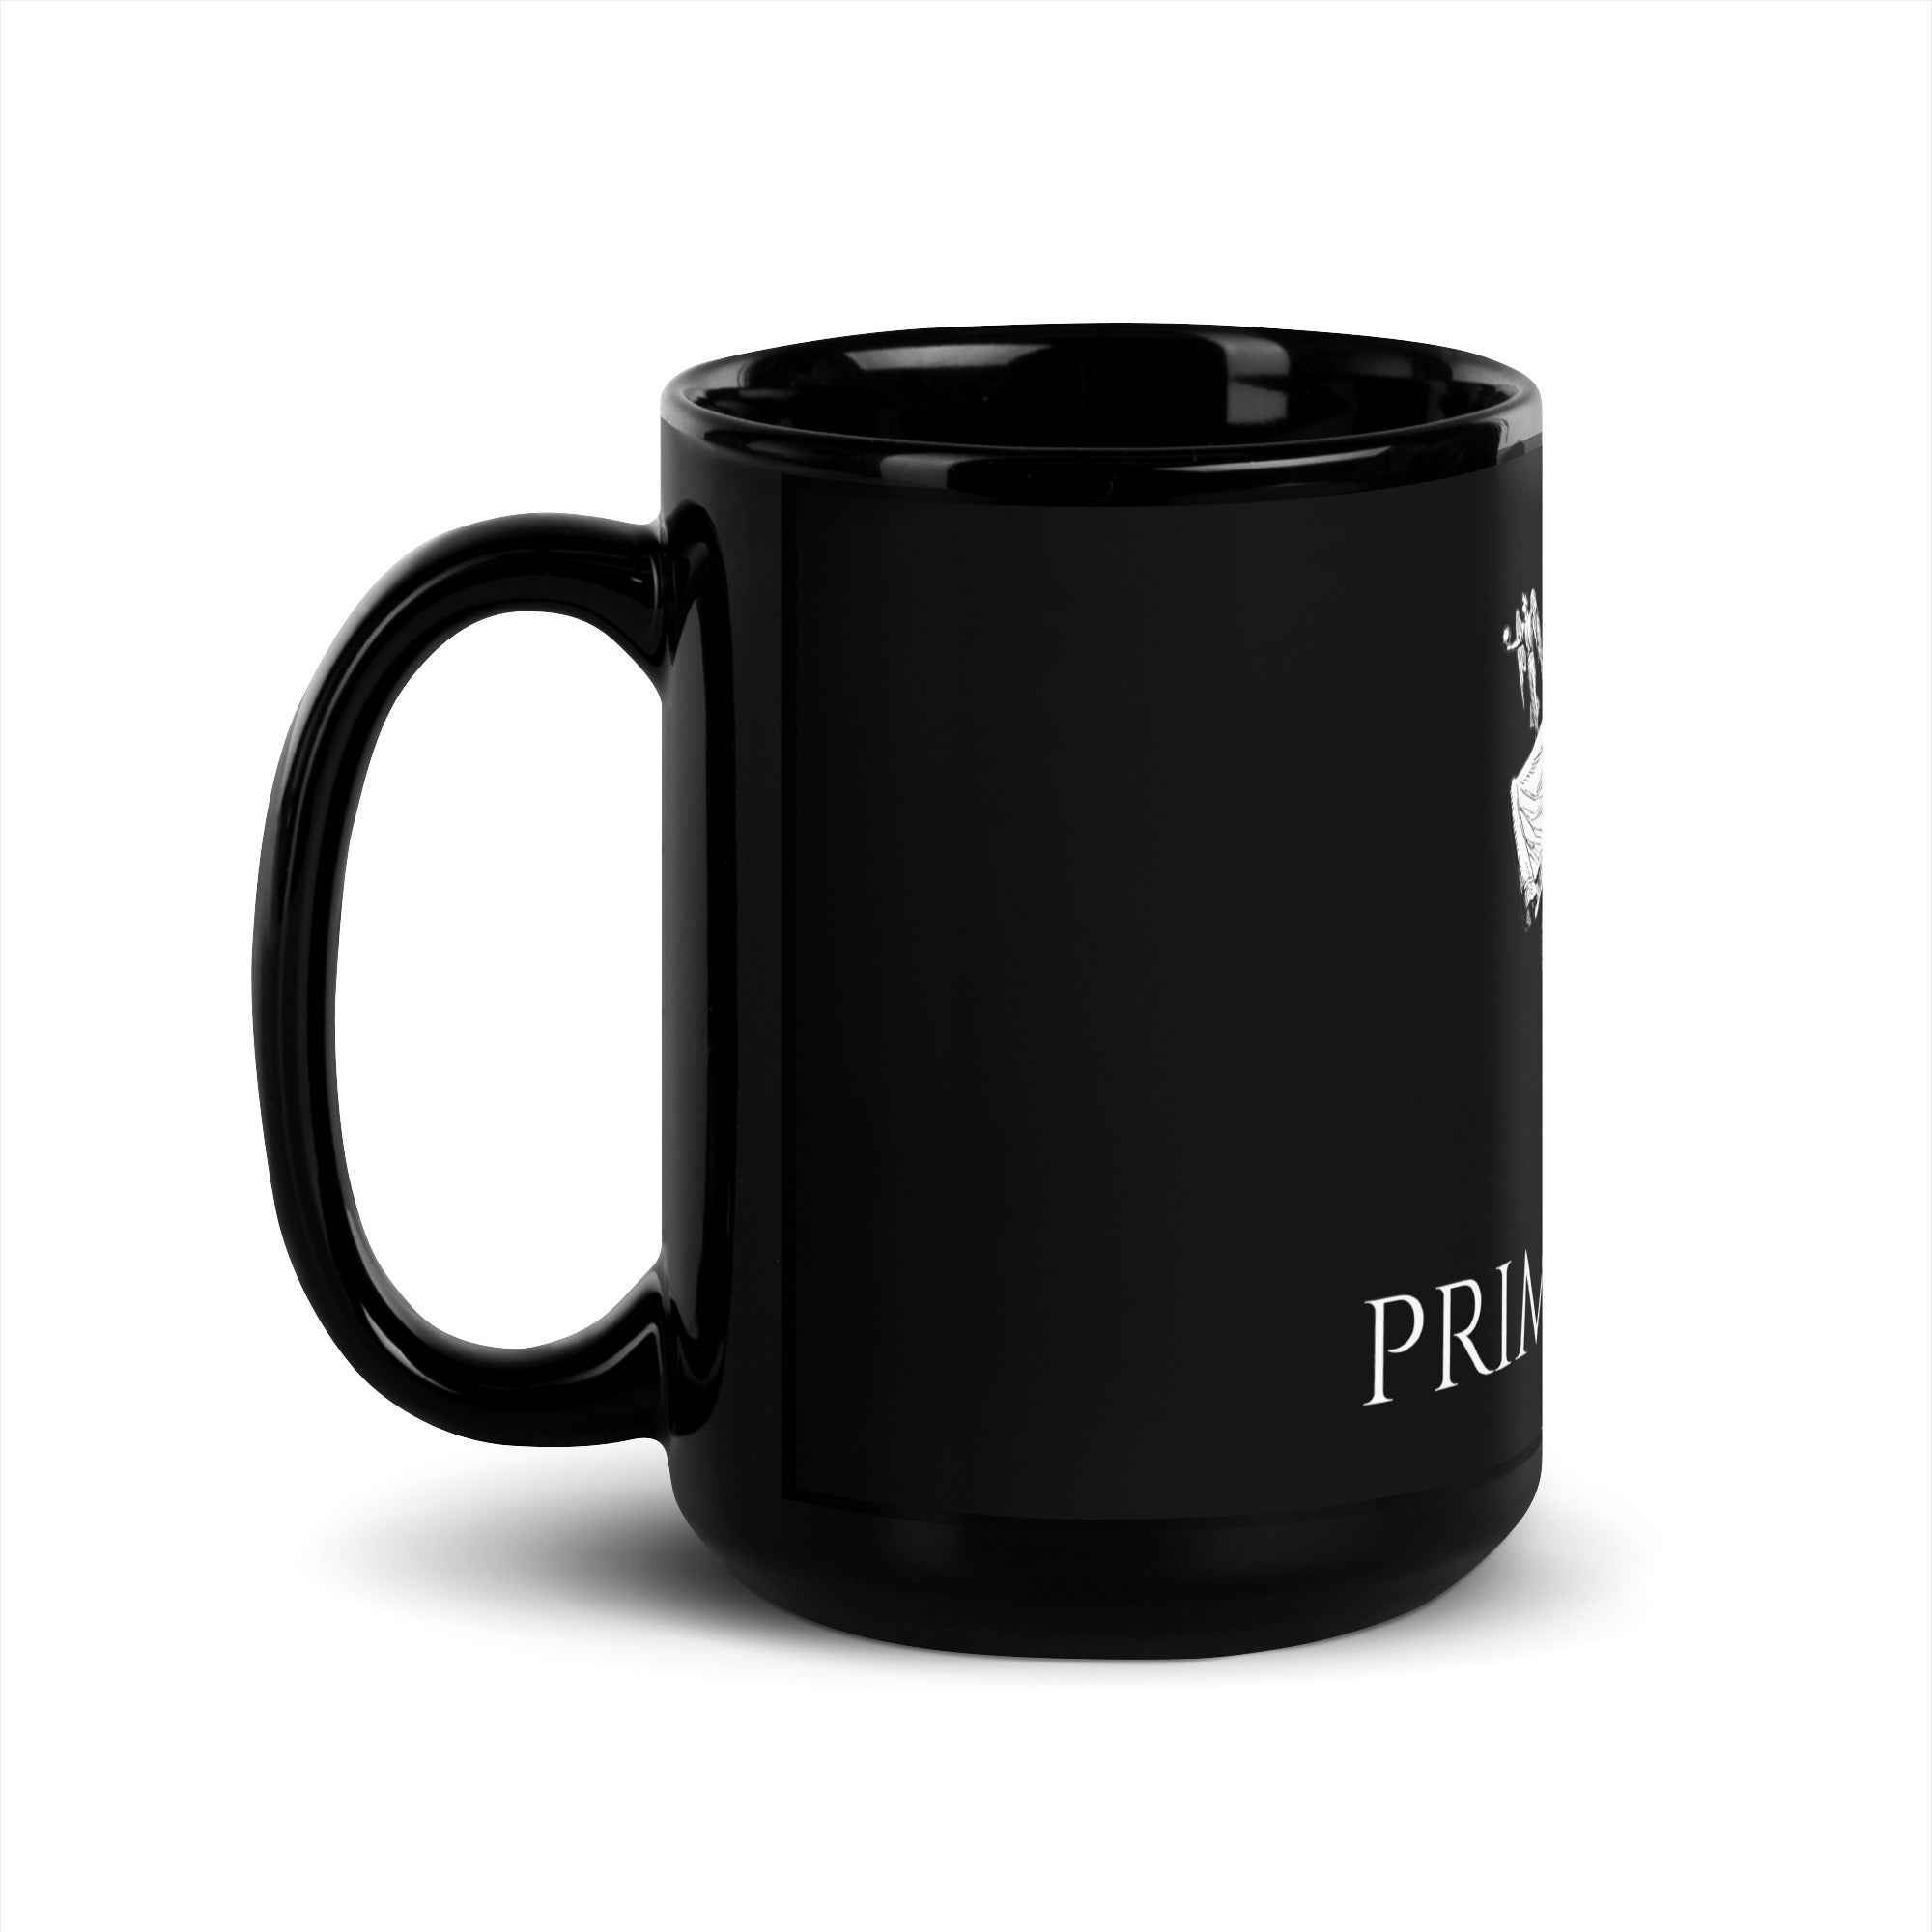 Primus Pilus - Roman Legionary Standard - Black Glossy Mug